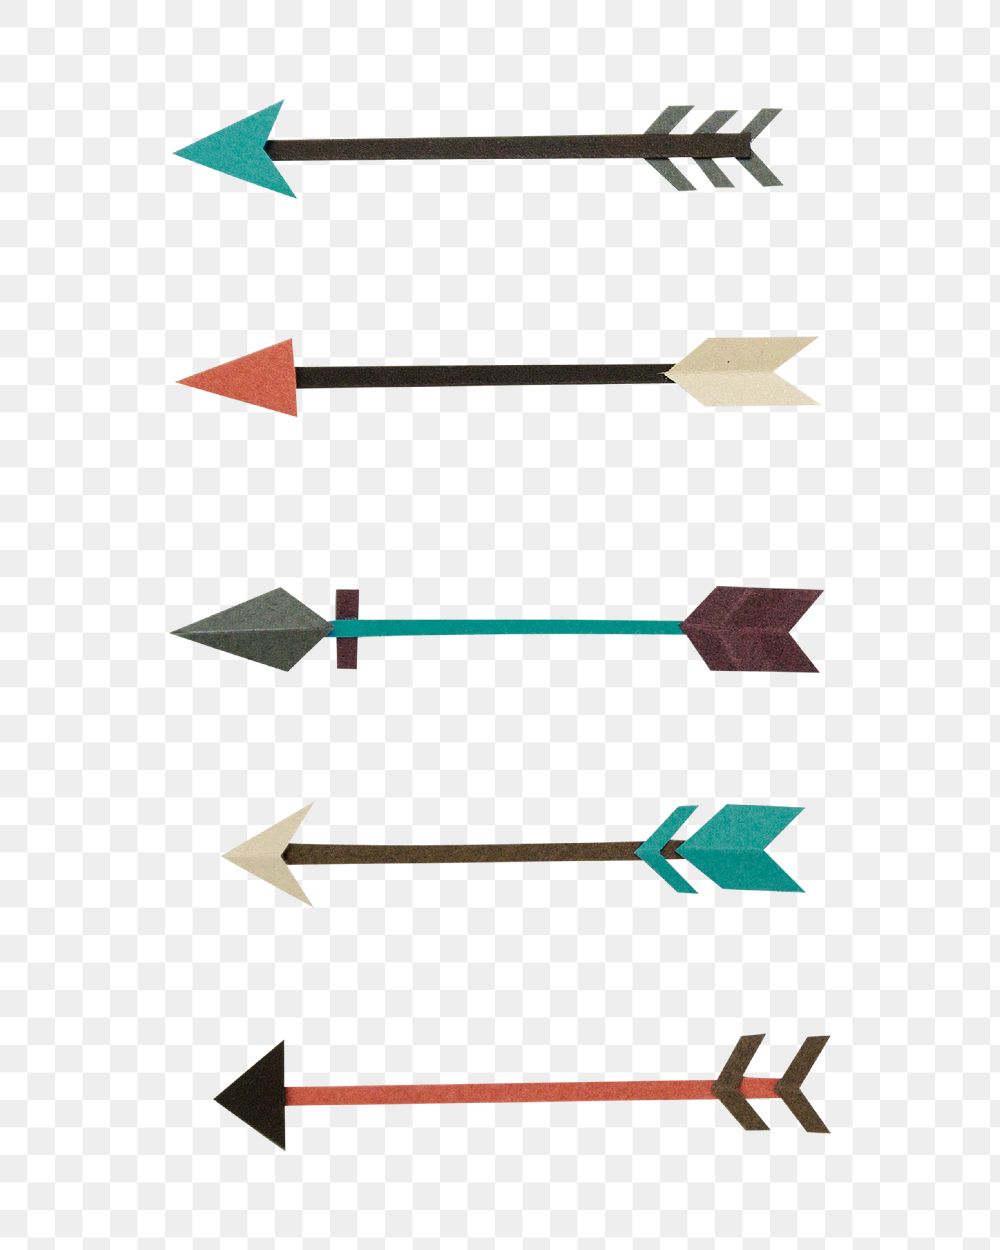 Arrow symbol paper craft set design element